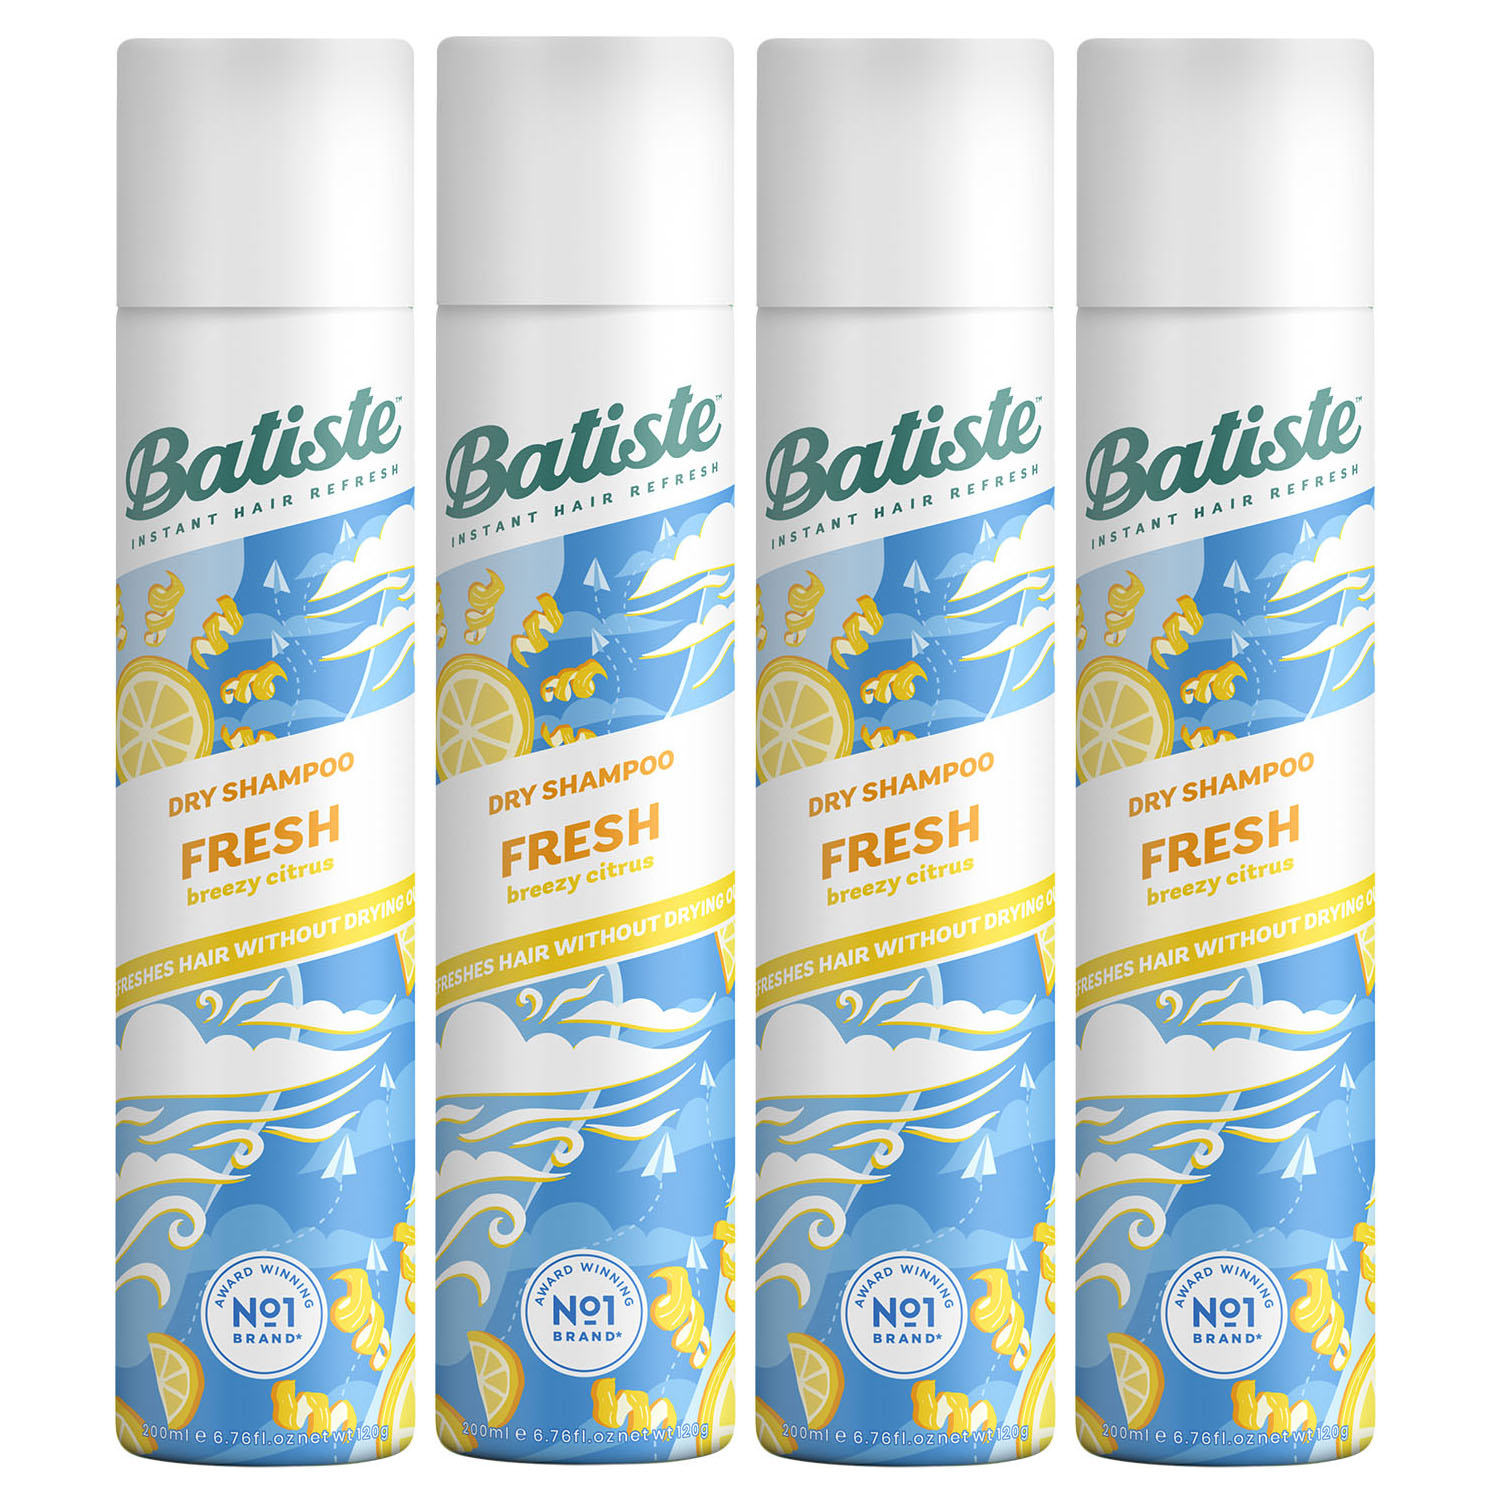 Batiste Комплект Fresh Сухой шампунь 4 шт х 200 мл (Batiste, Fragrance)